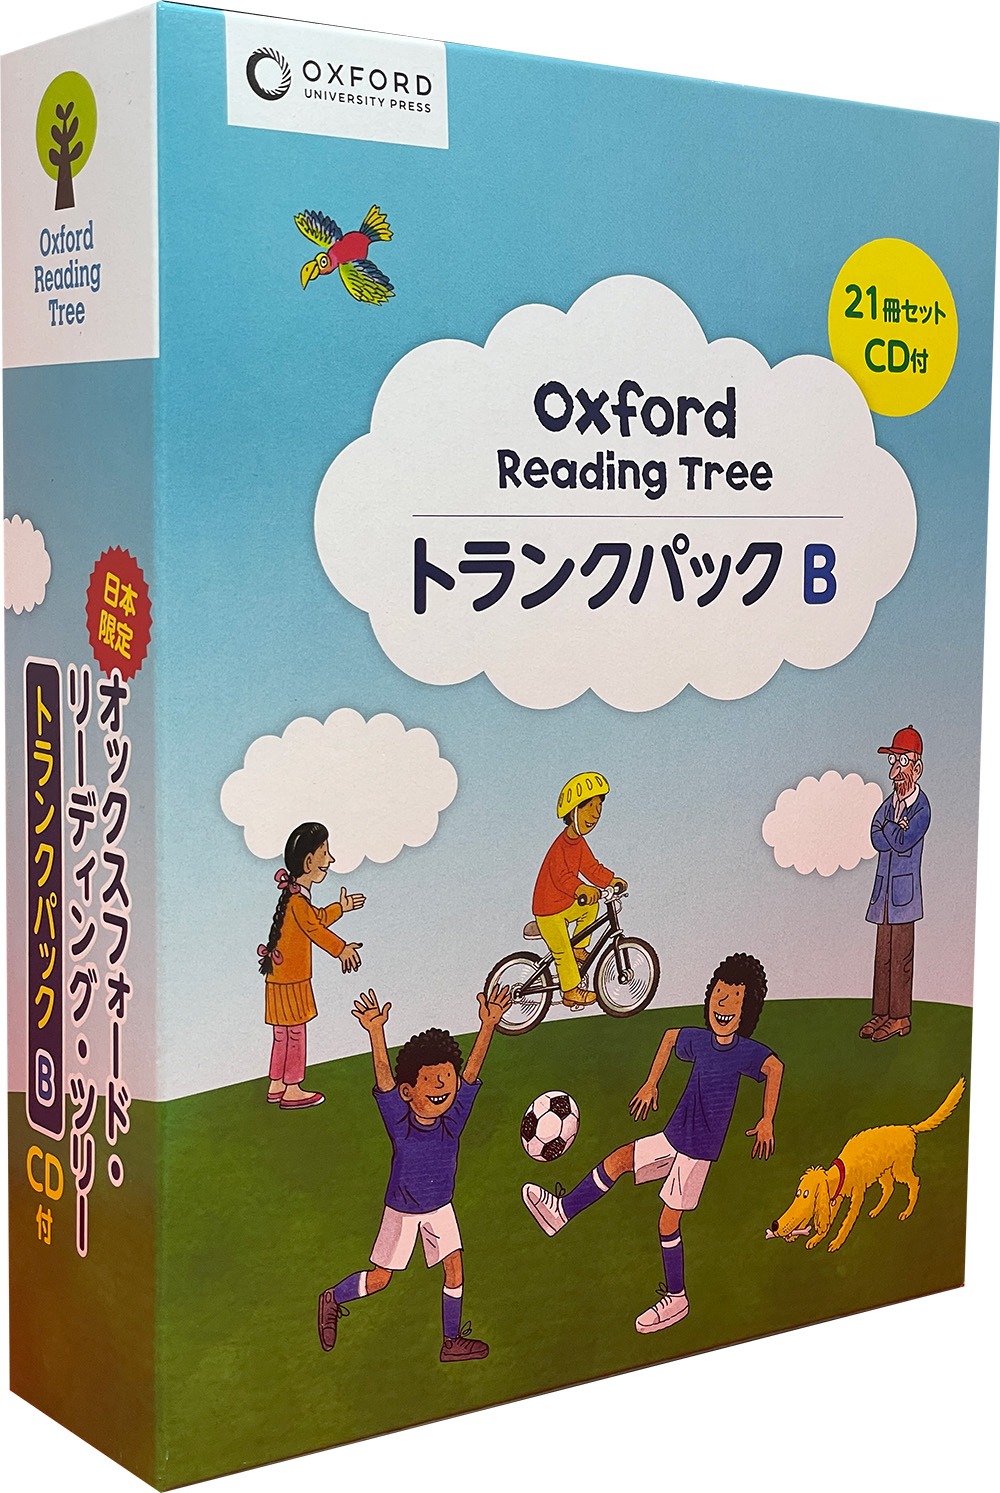 Oxford Reading Tree: Trunk Packs, Value Packs, Tadoku Pack